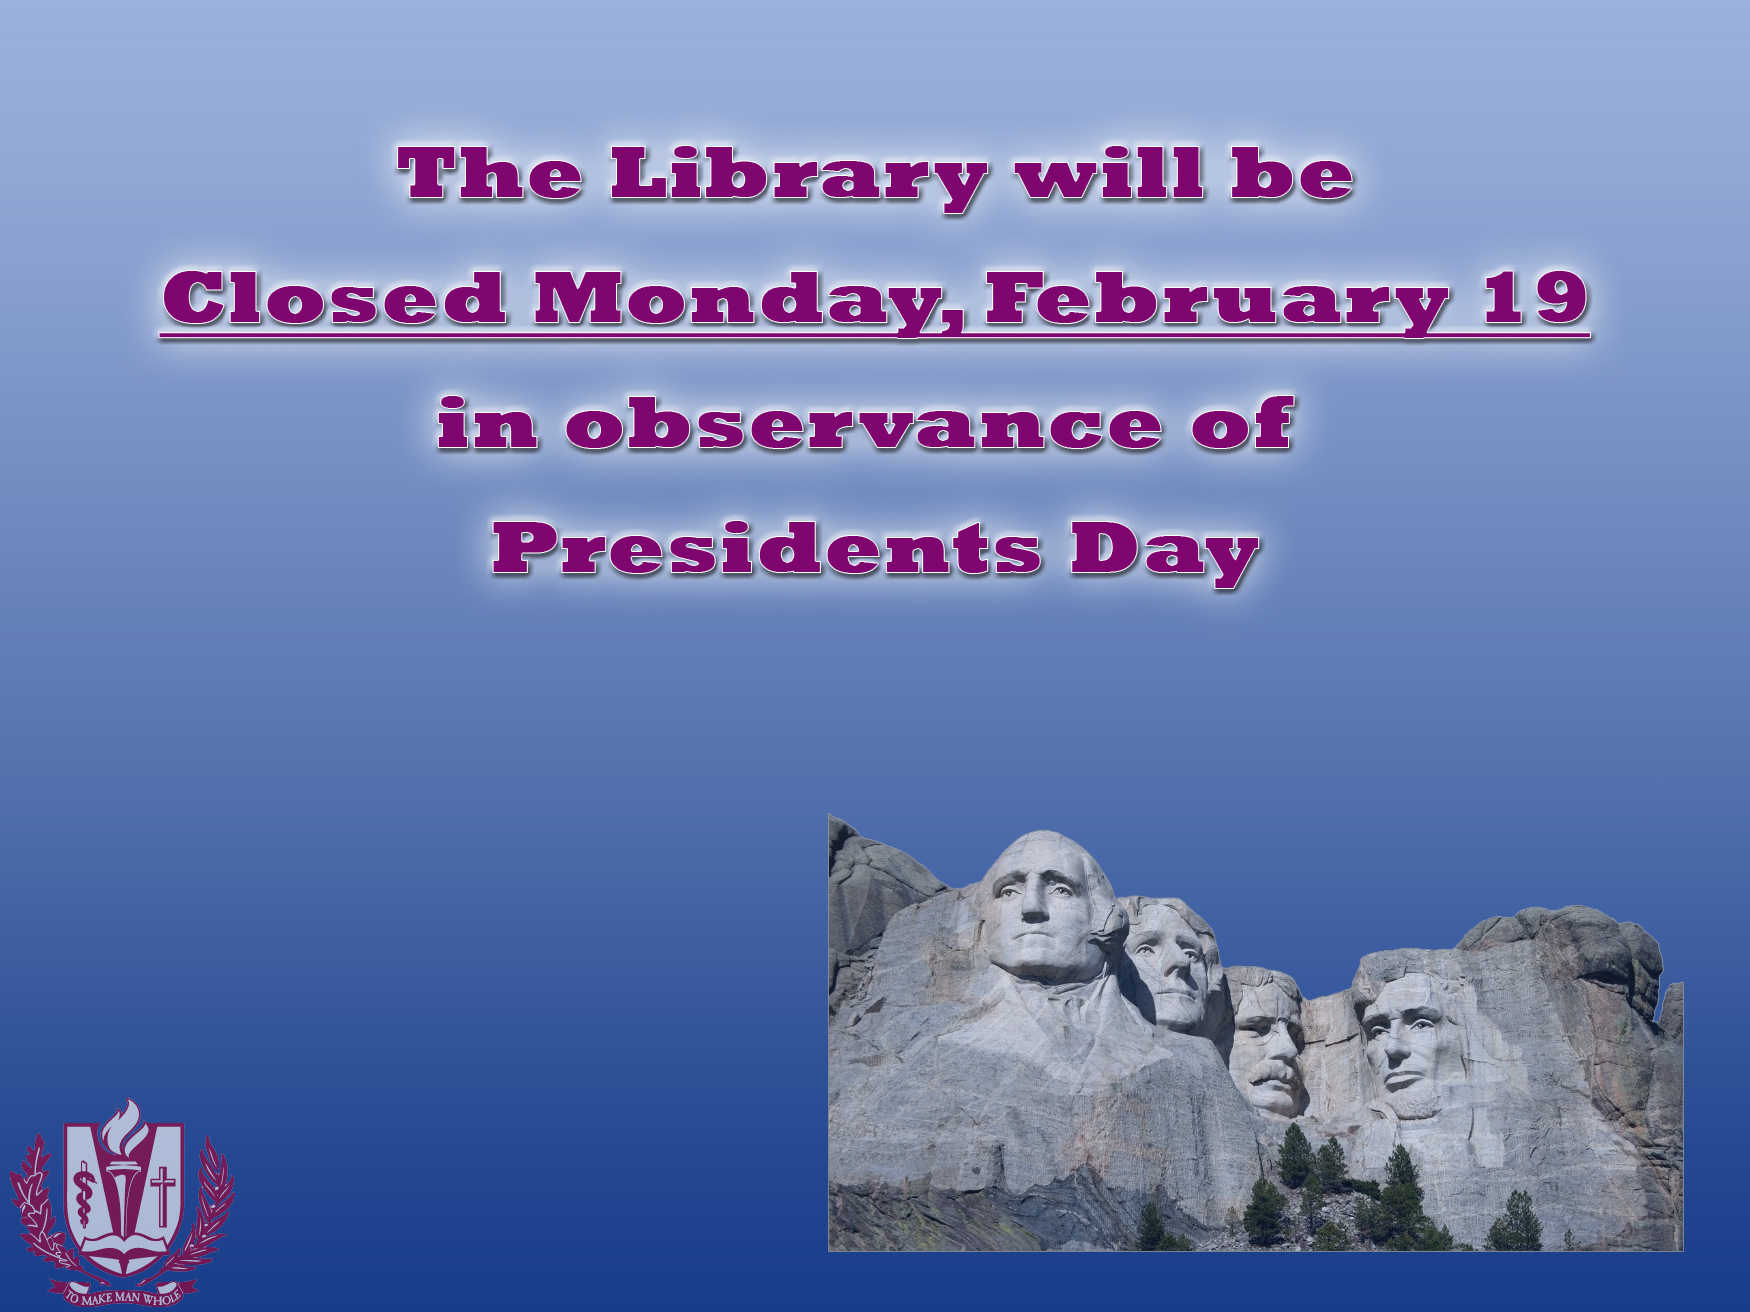 Presidents day closure - Mt Rushmore in the bottom right corner, LLU logo in the bottom left corner